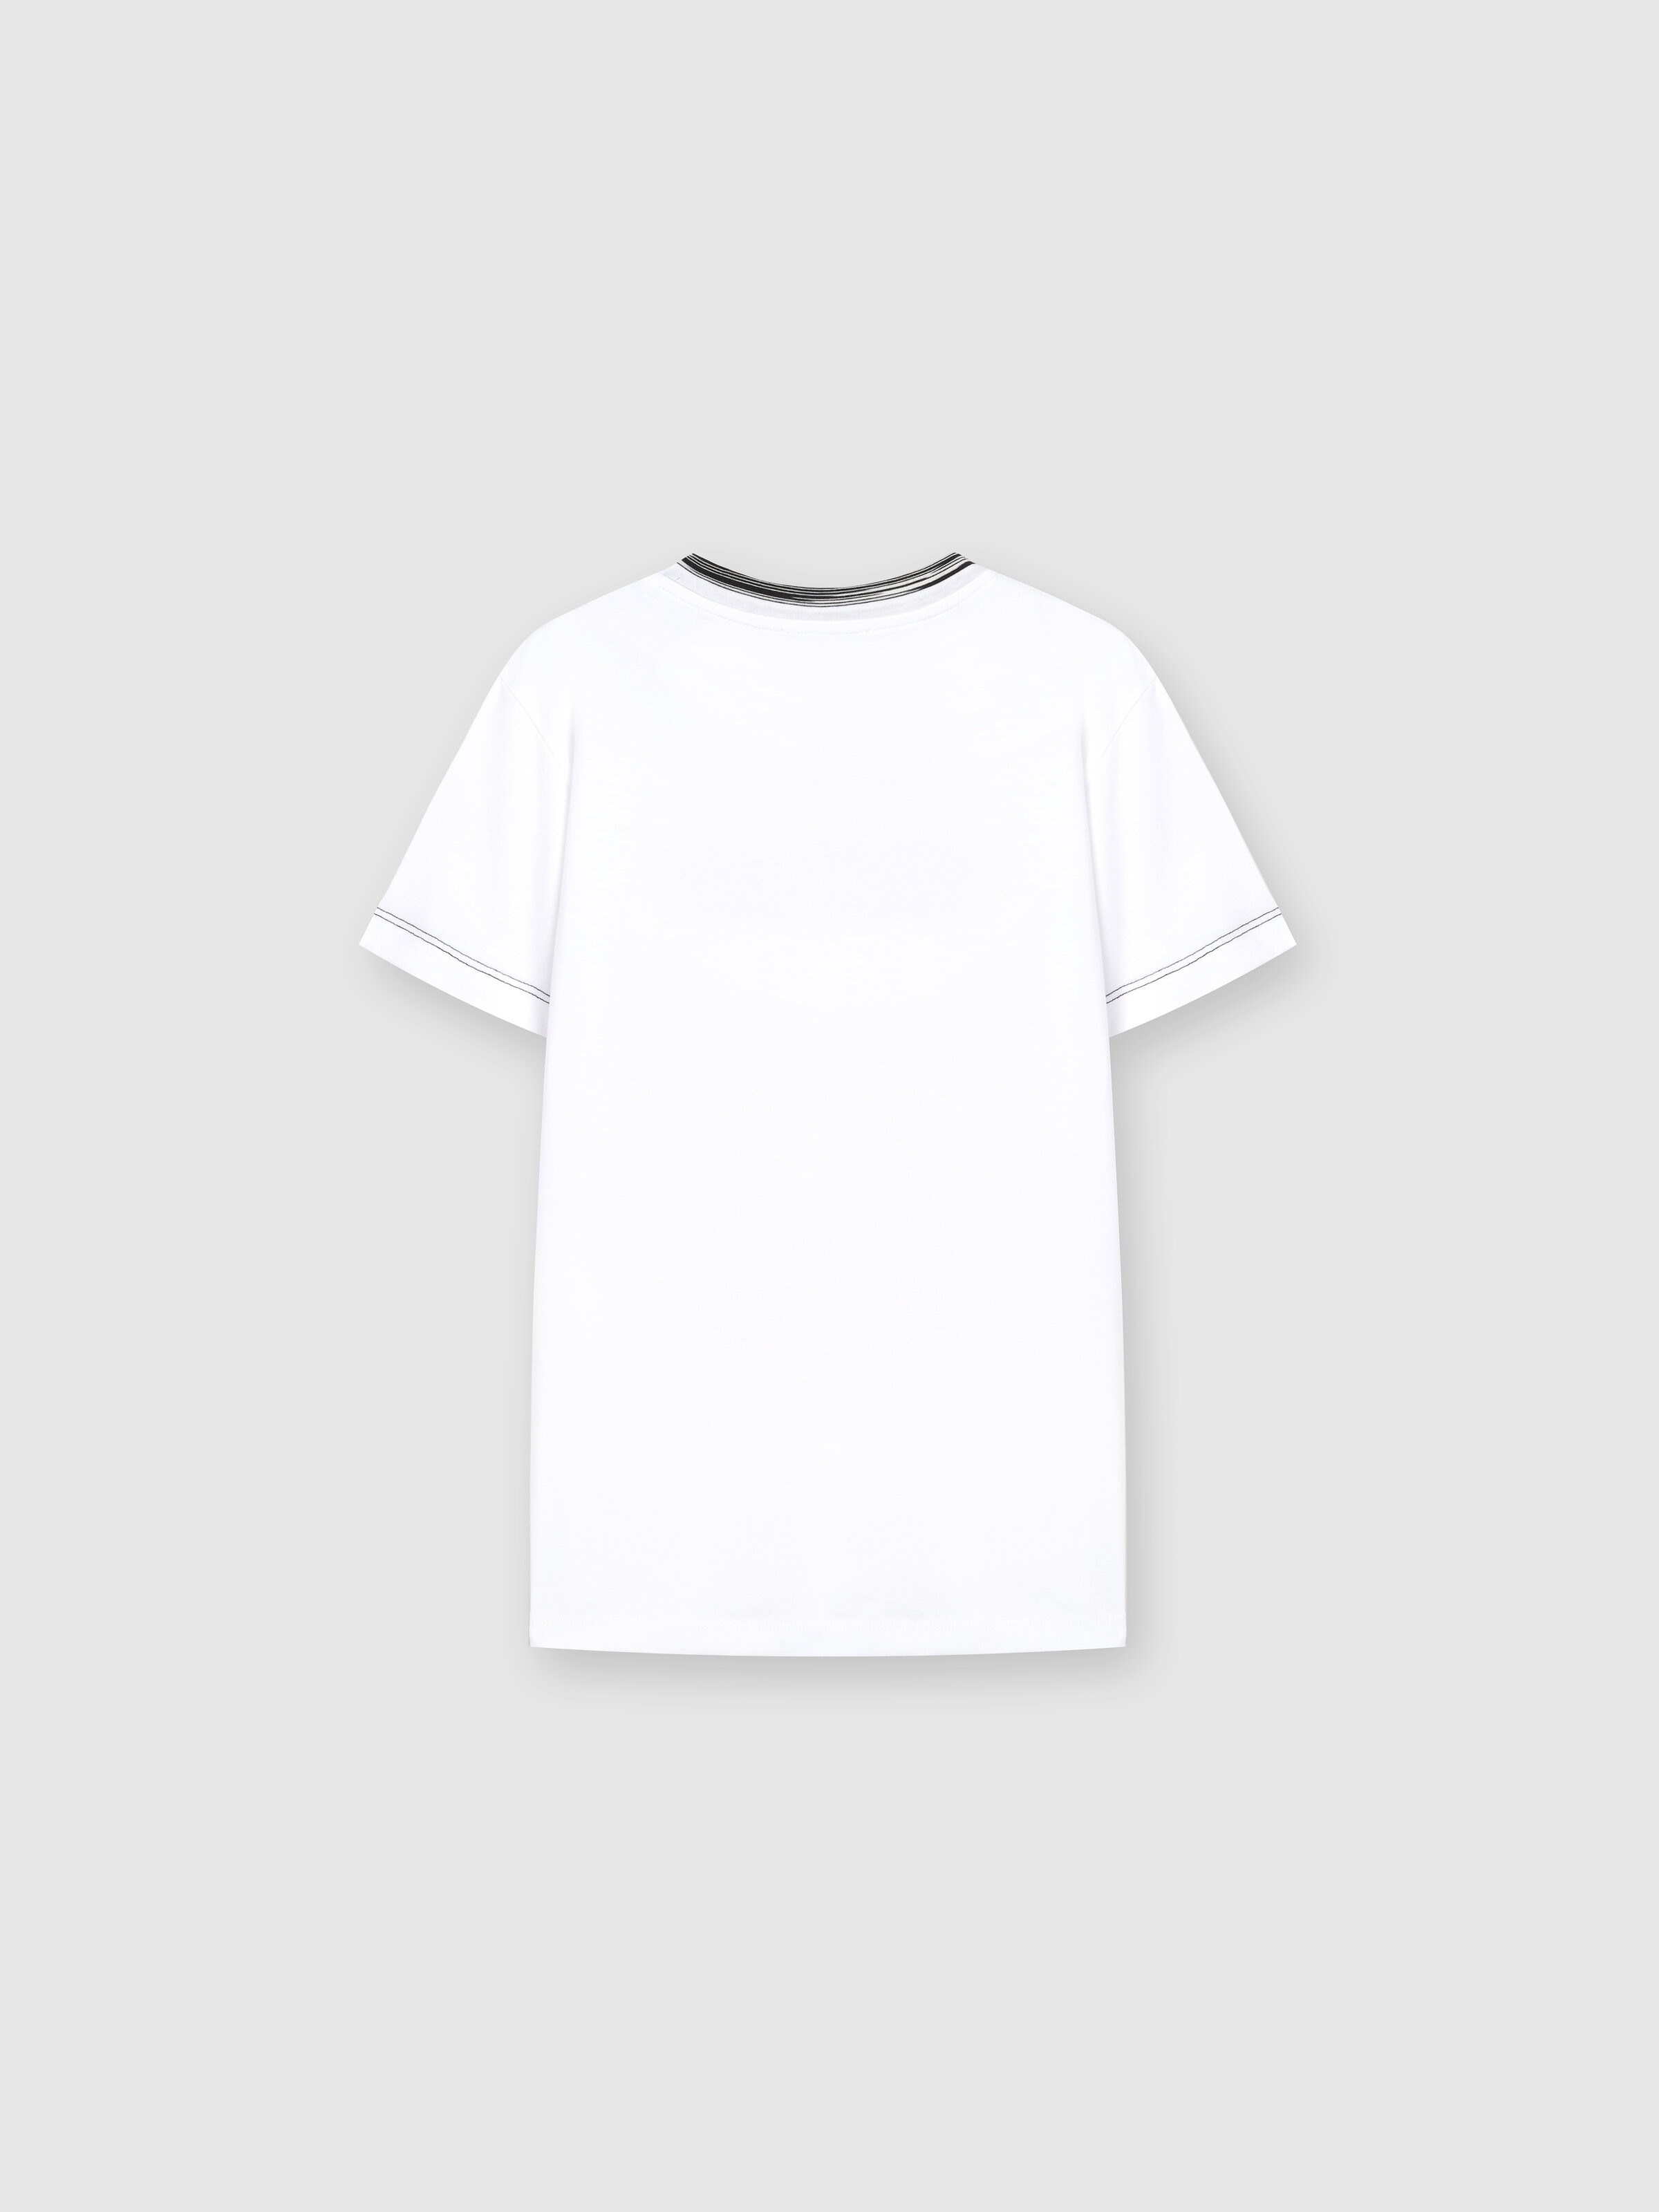 Cotton jersey T-shirt with logo, Black & White - 1